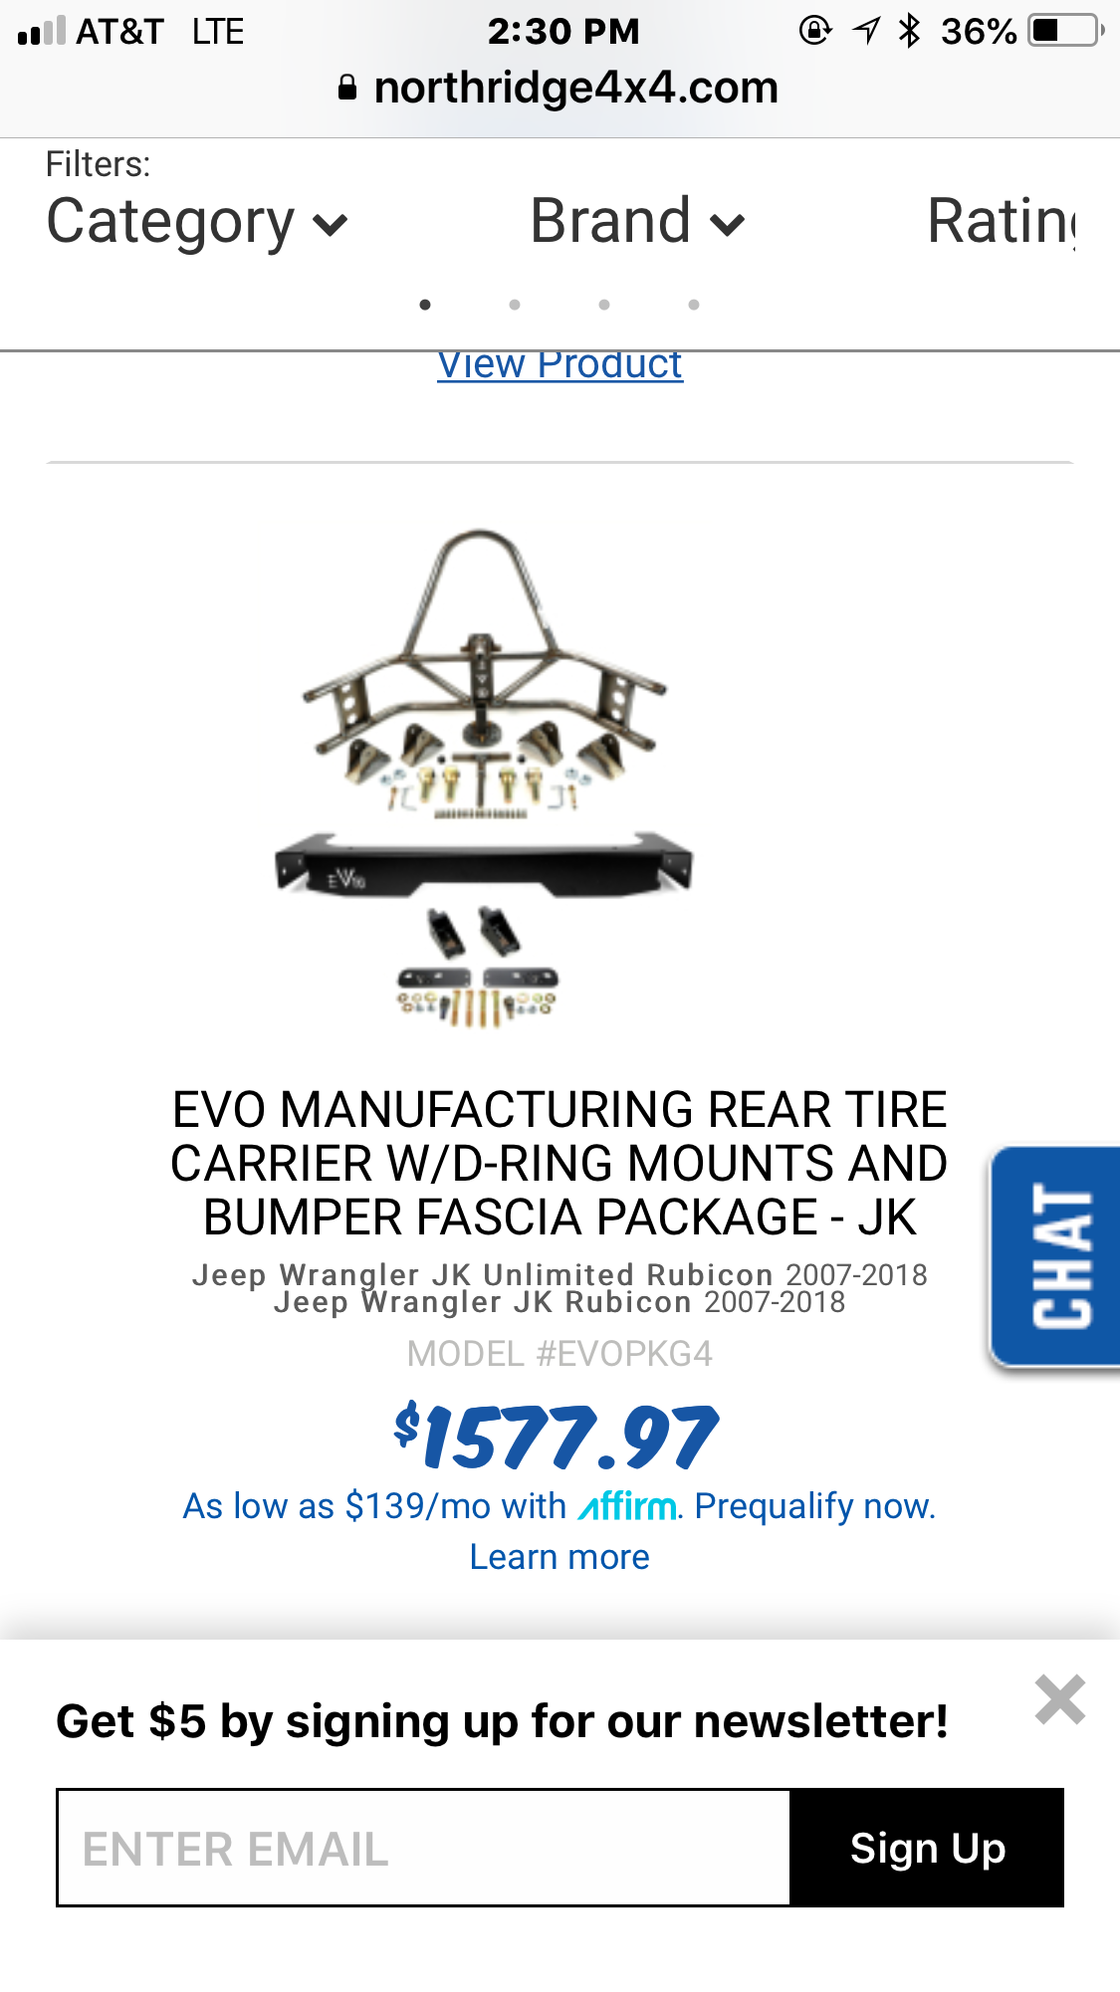 Accessories - Evo Mfg. tire carrier - Used - Anaheim, CA 92805, United States